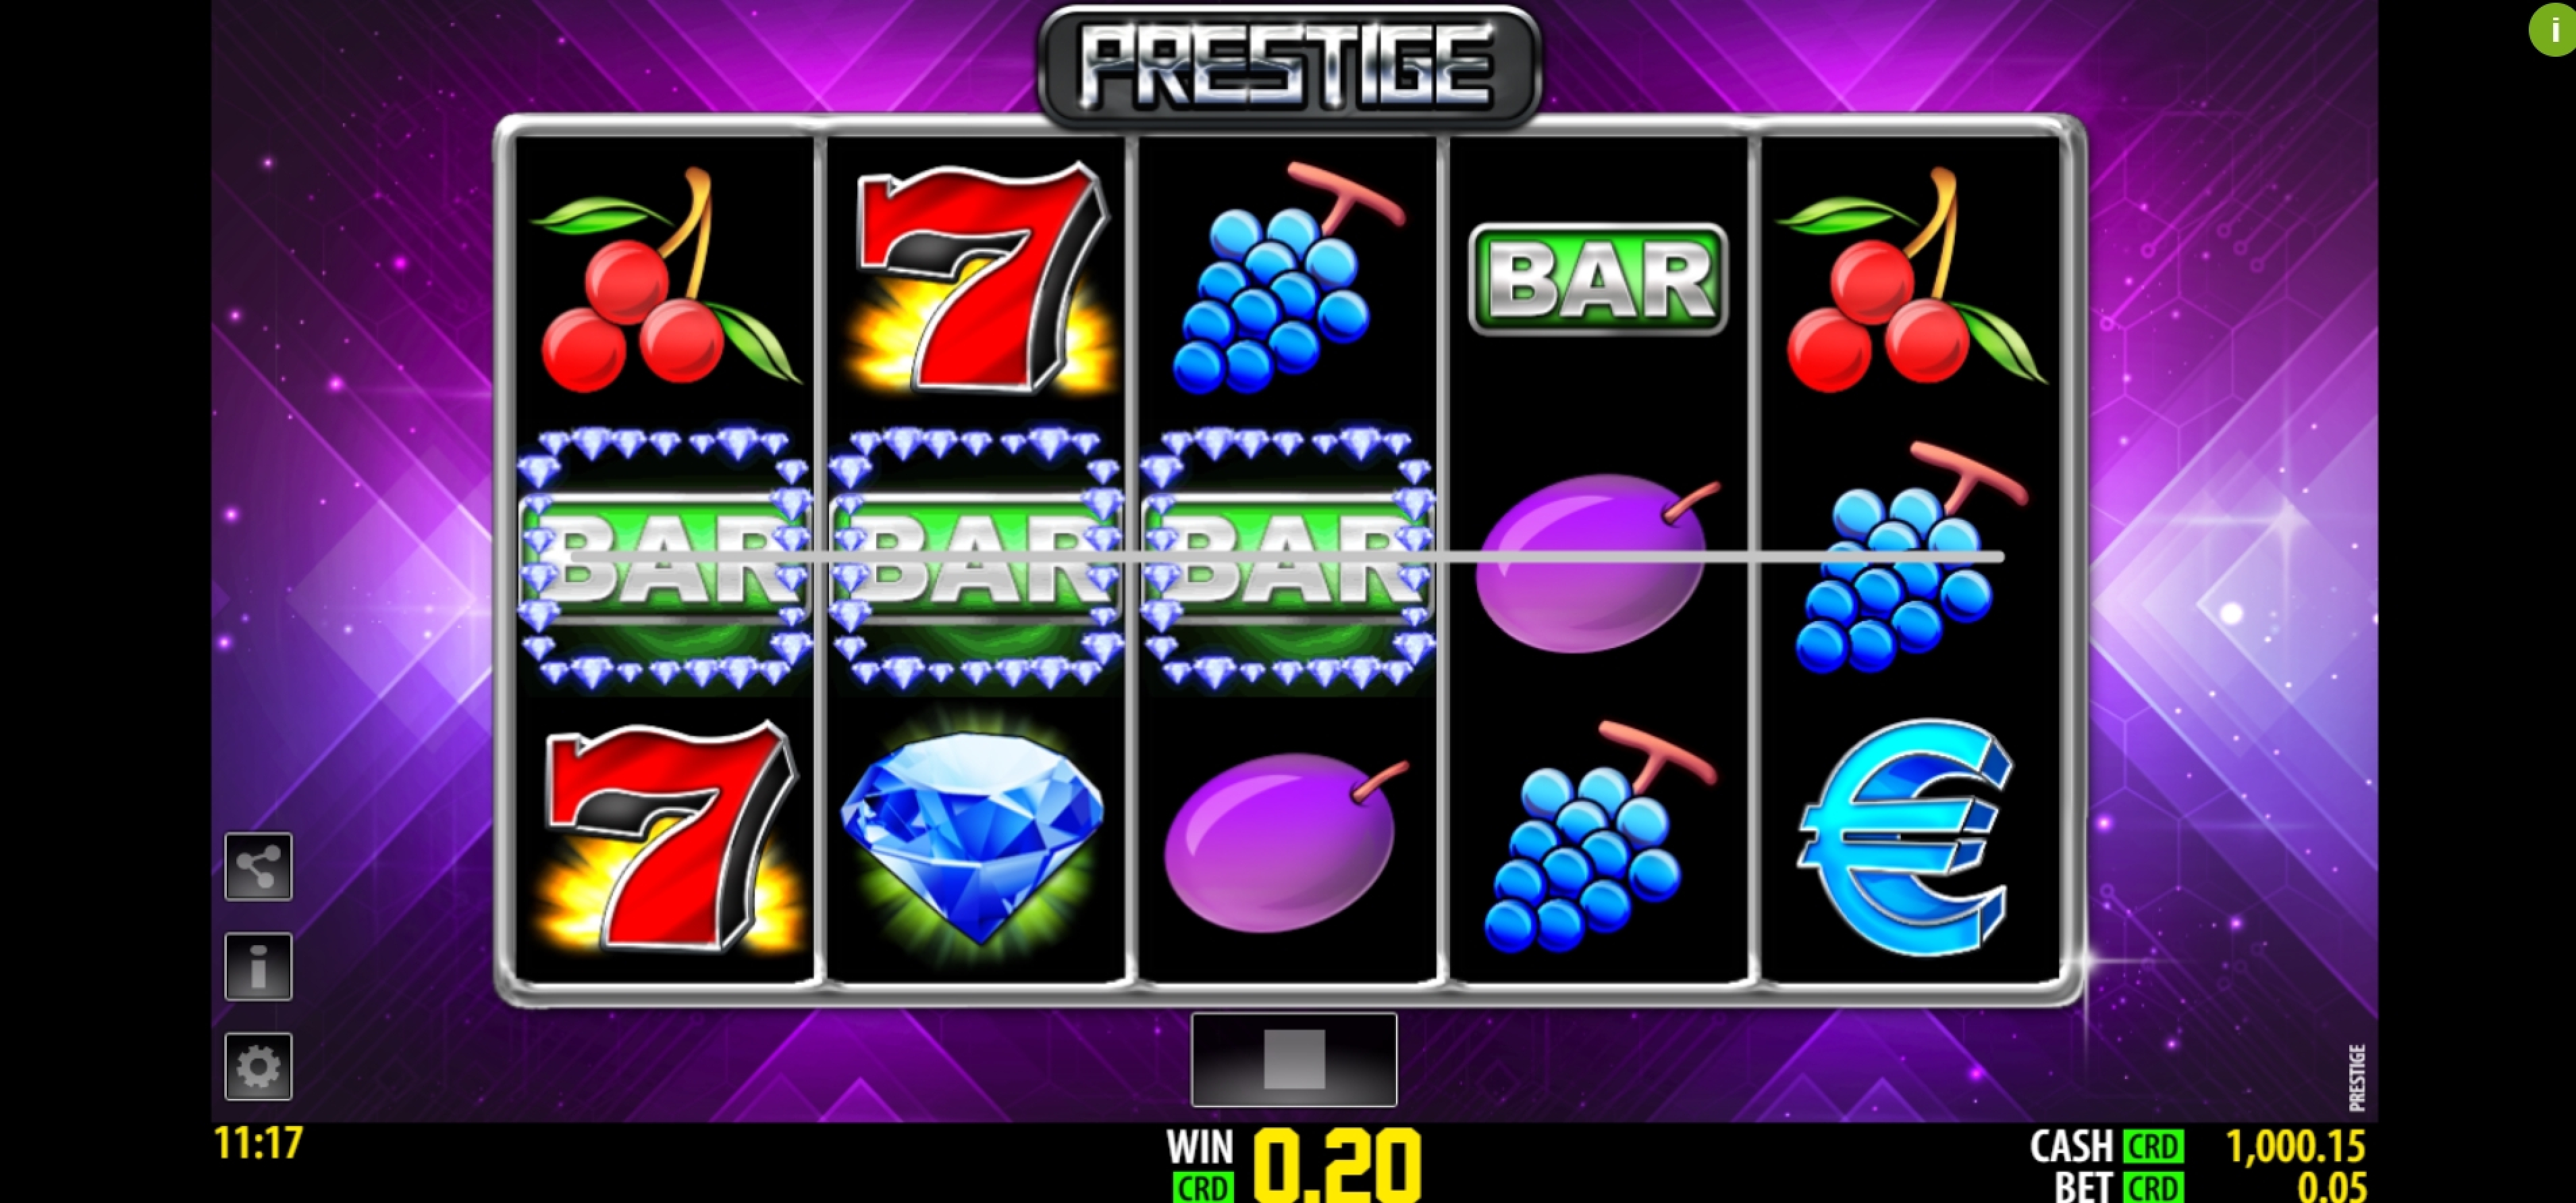 Win Money in Prestige Free Slot Game by Nazionale Elettronica